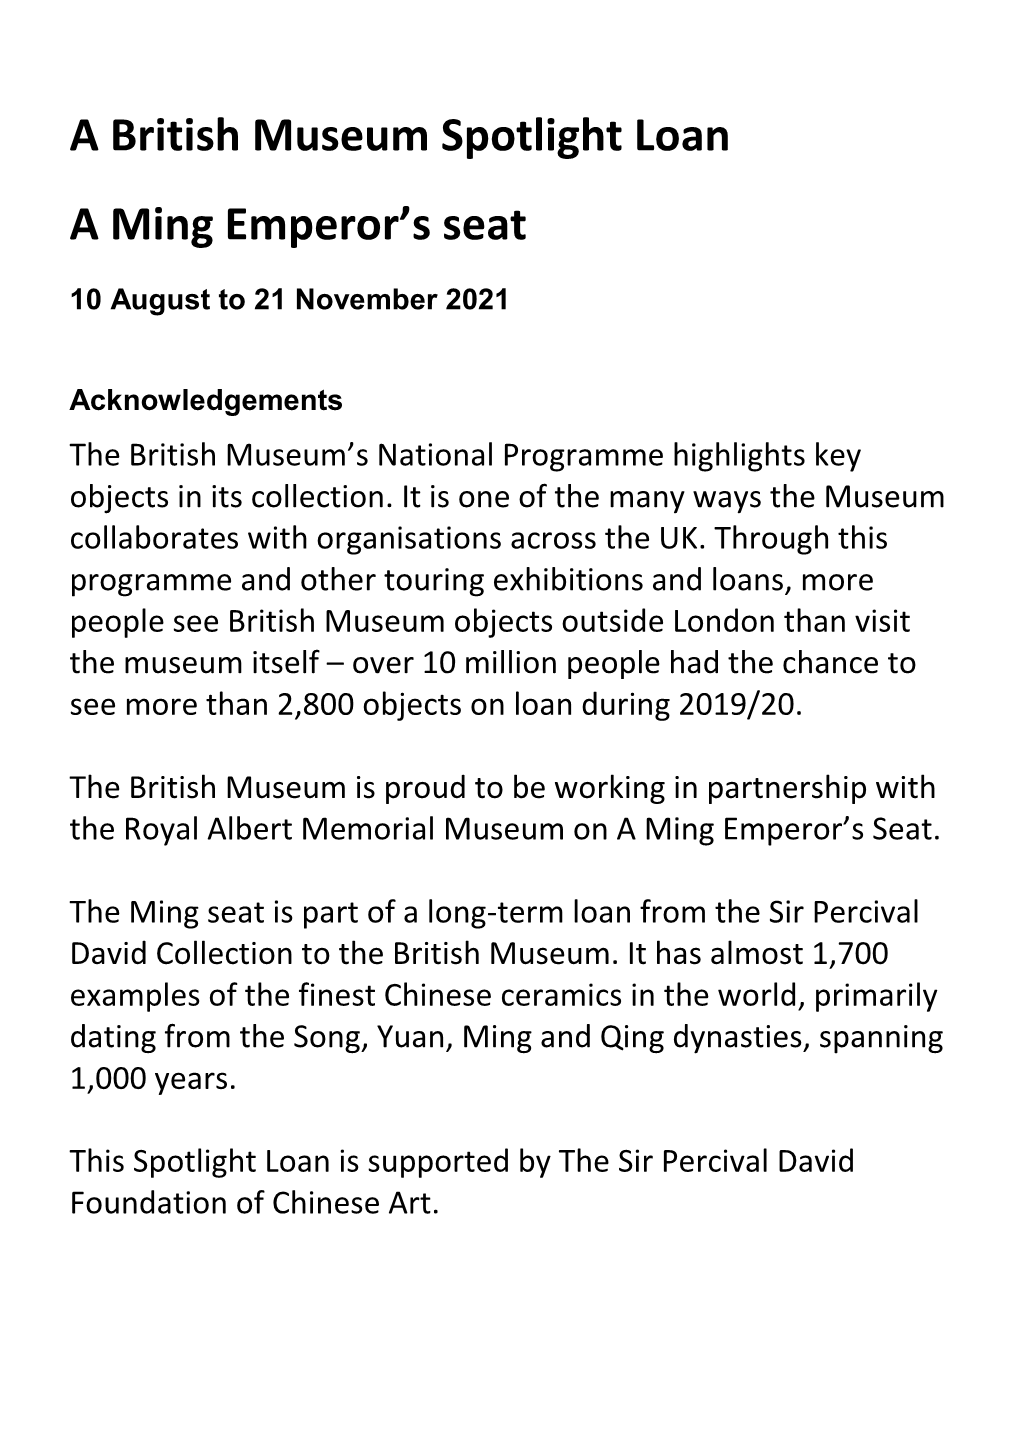 A British Museum Spotlight Loan a Ming Emperor's Seat